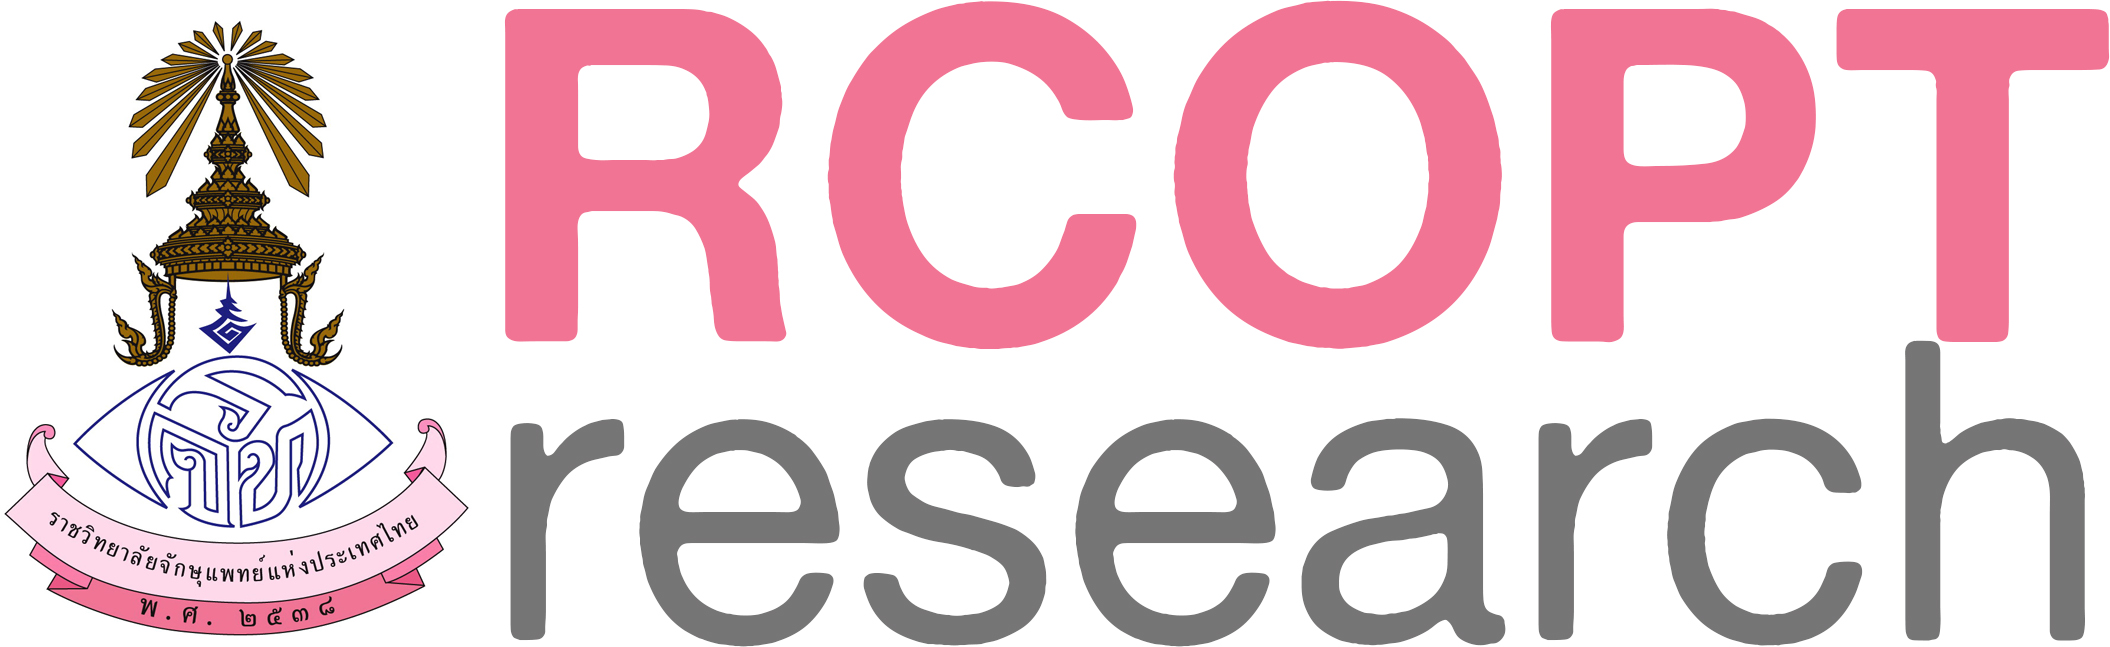 2118RCOPT research logo1.jpg